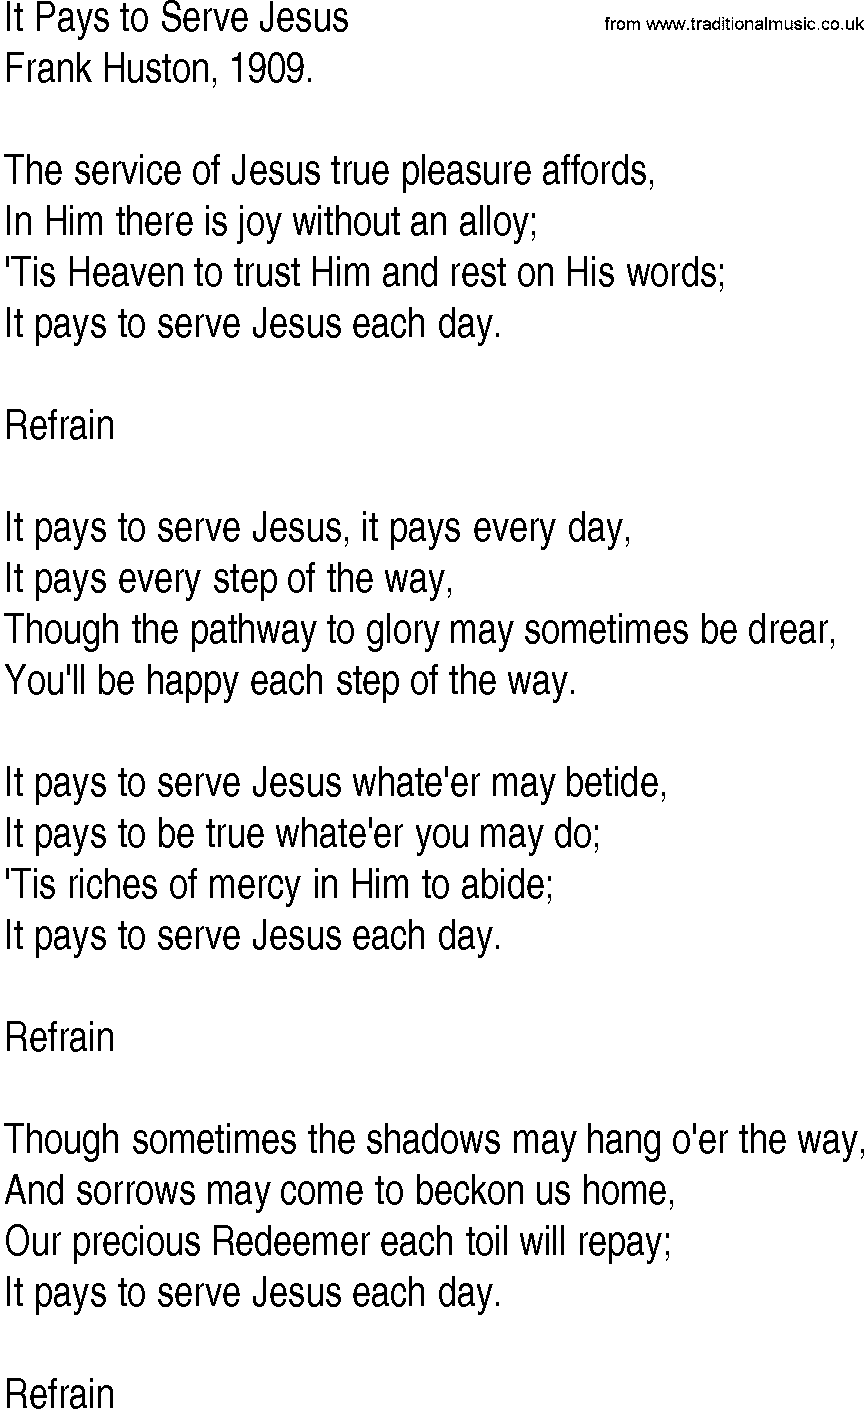 Hymn and Gospel Song: It Pays to Serve Jesus by Frank Huston lyrics